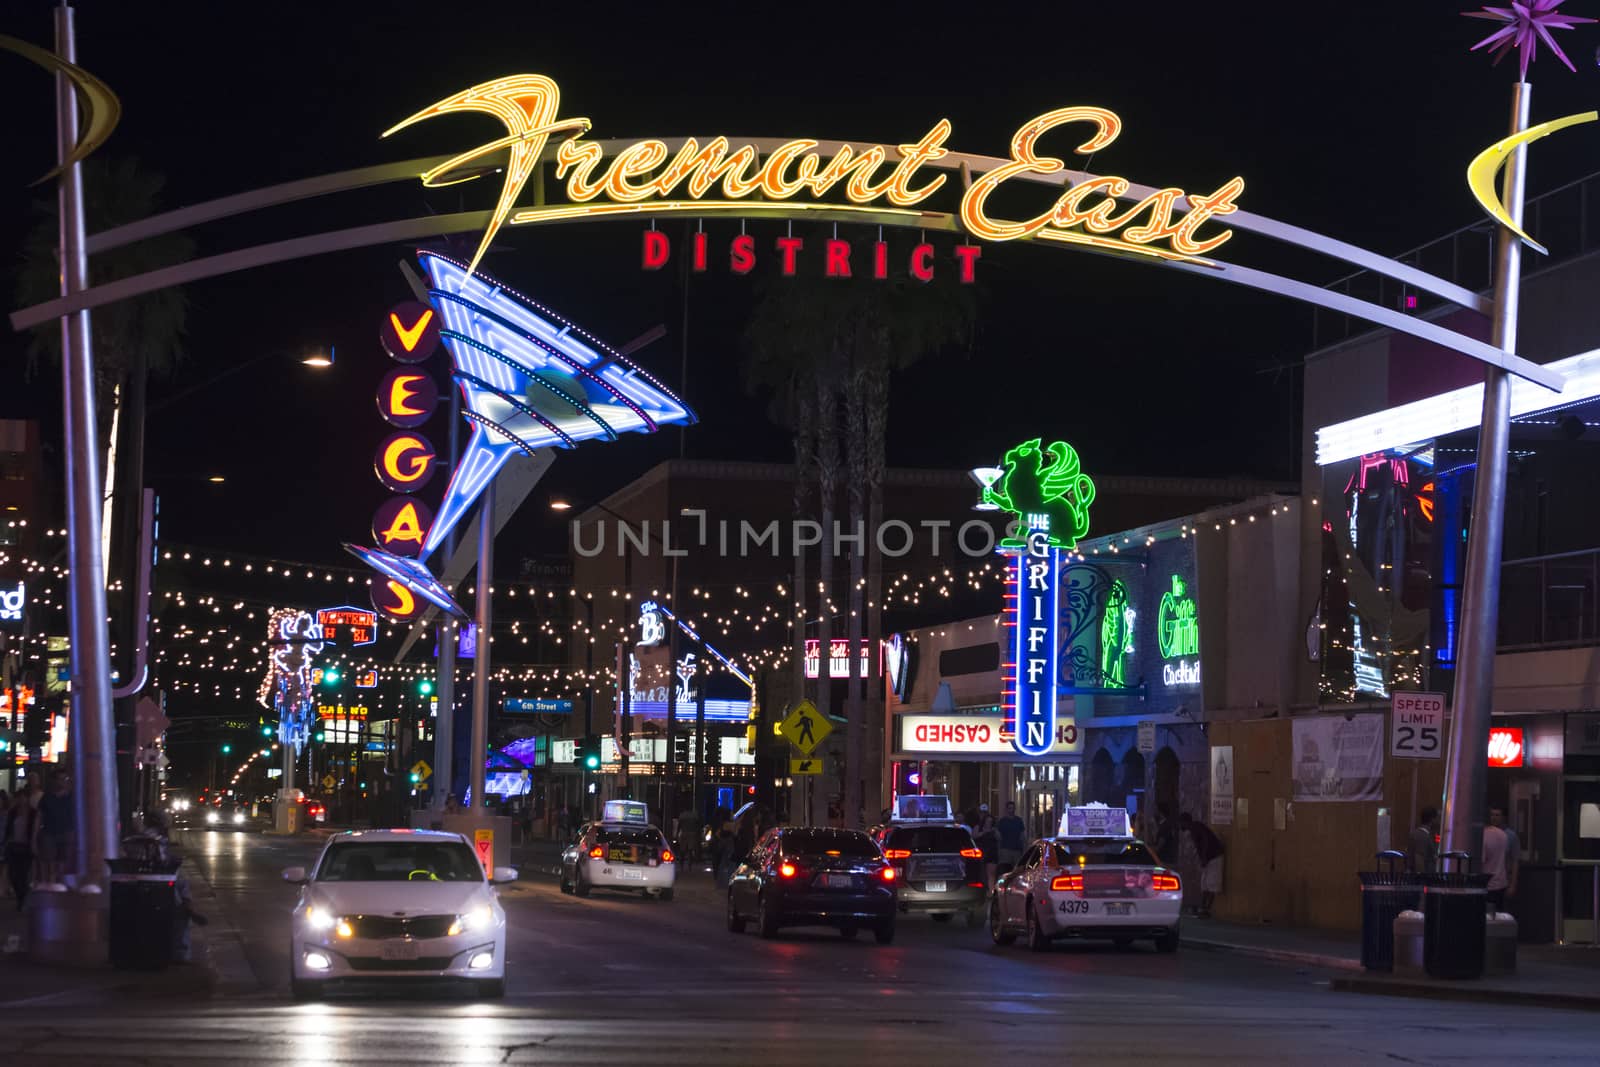 Fremont East district in Las Vegas by shakzu